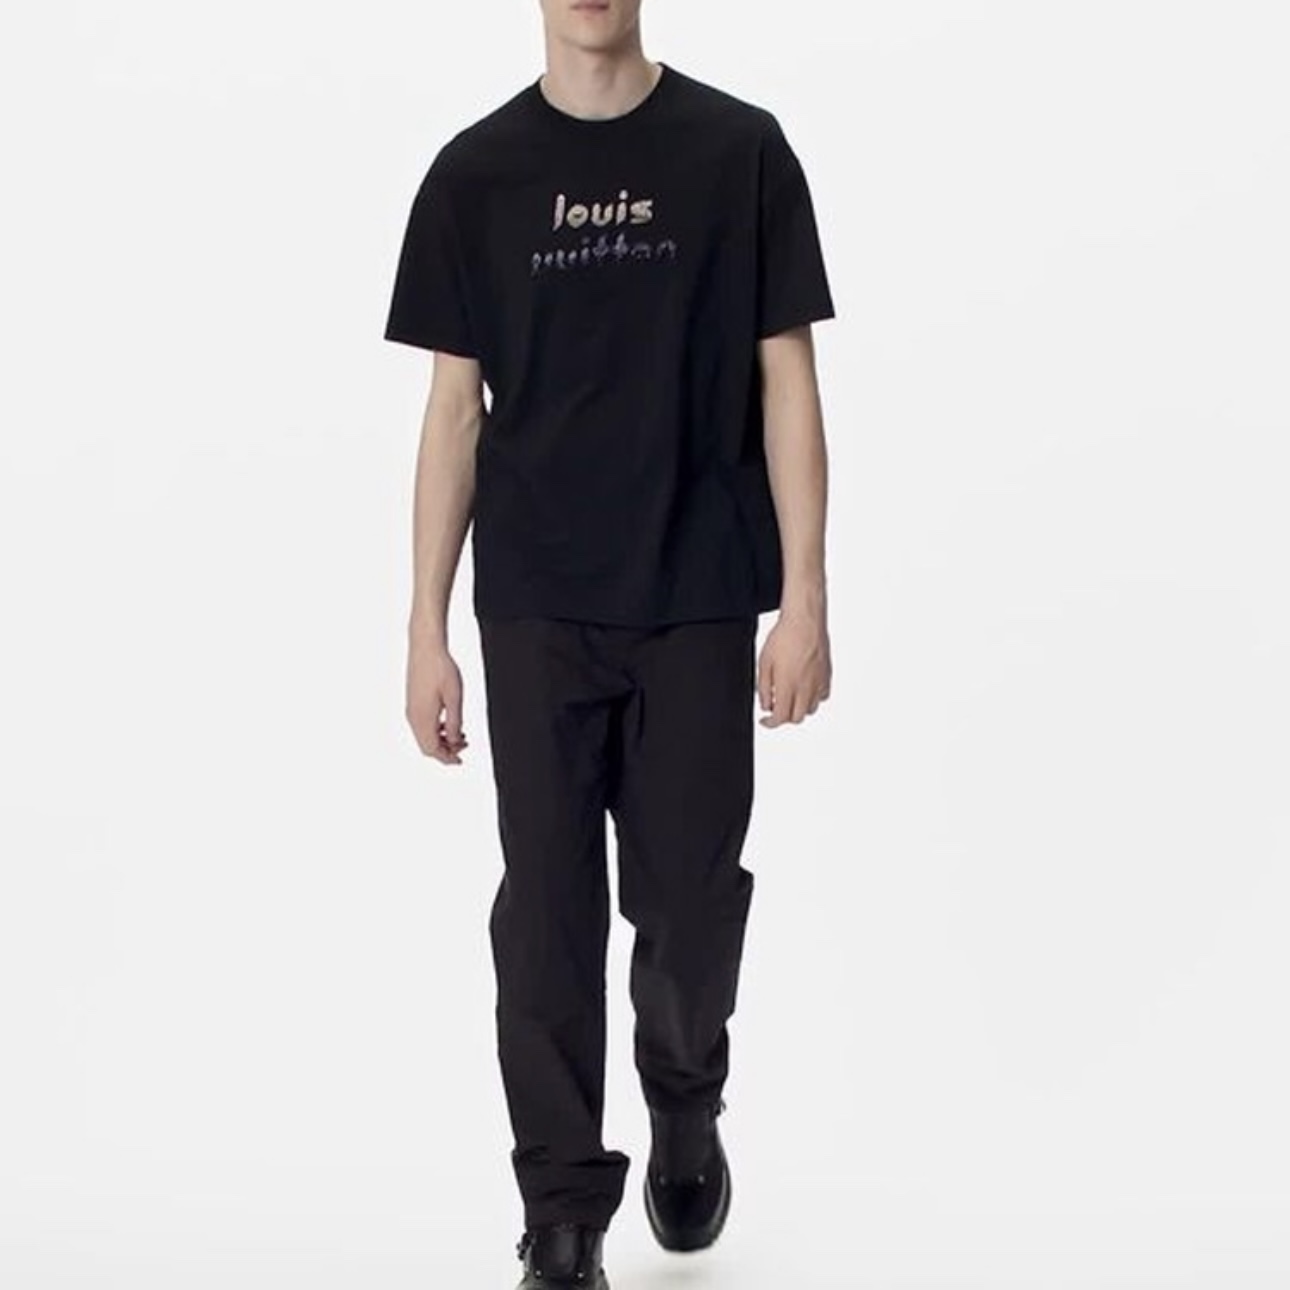 Louis Vuitton Clothing T-Shirt High Quality
 Short Sleeve